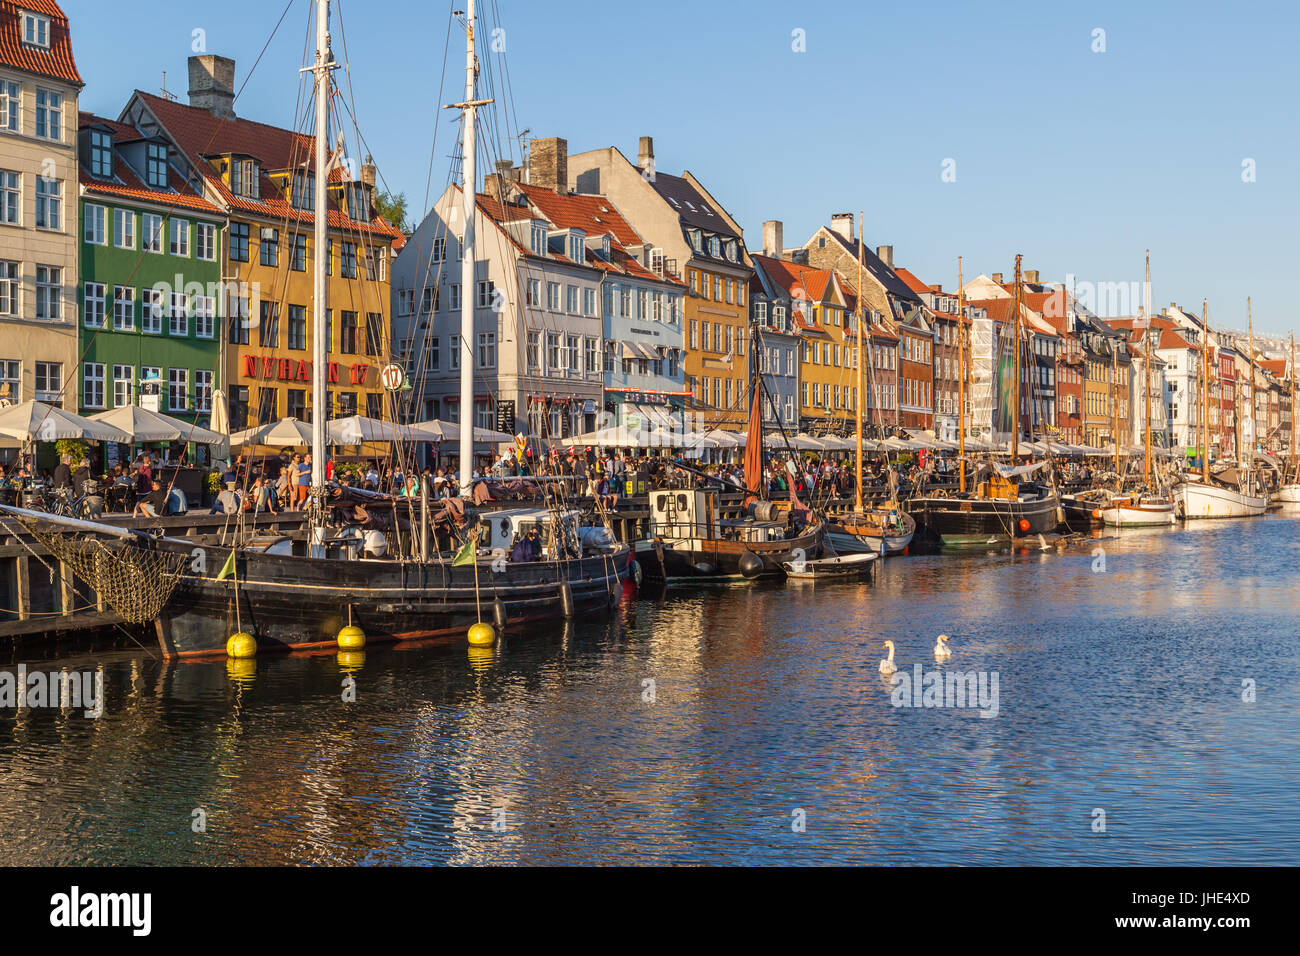 Nyhavn (New Harbor)in Copenhagen, Denmark Stock Photo